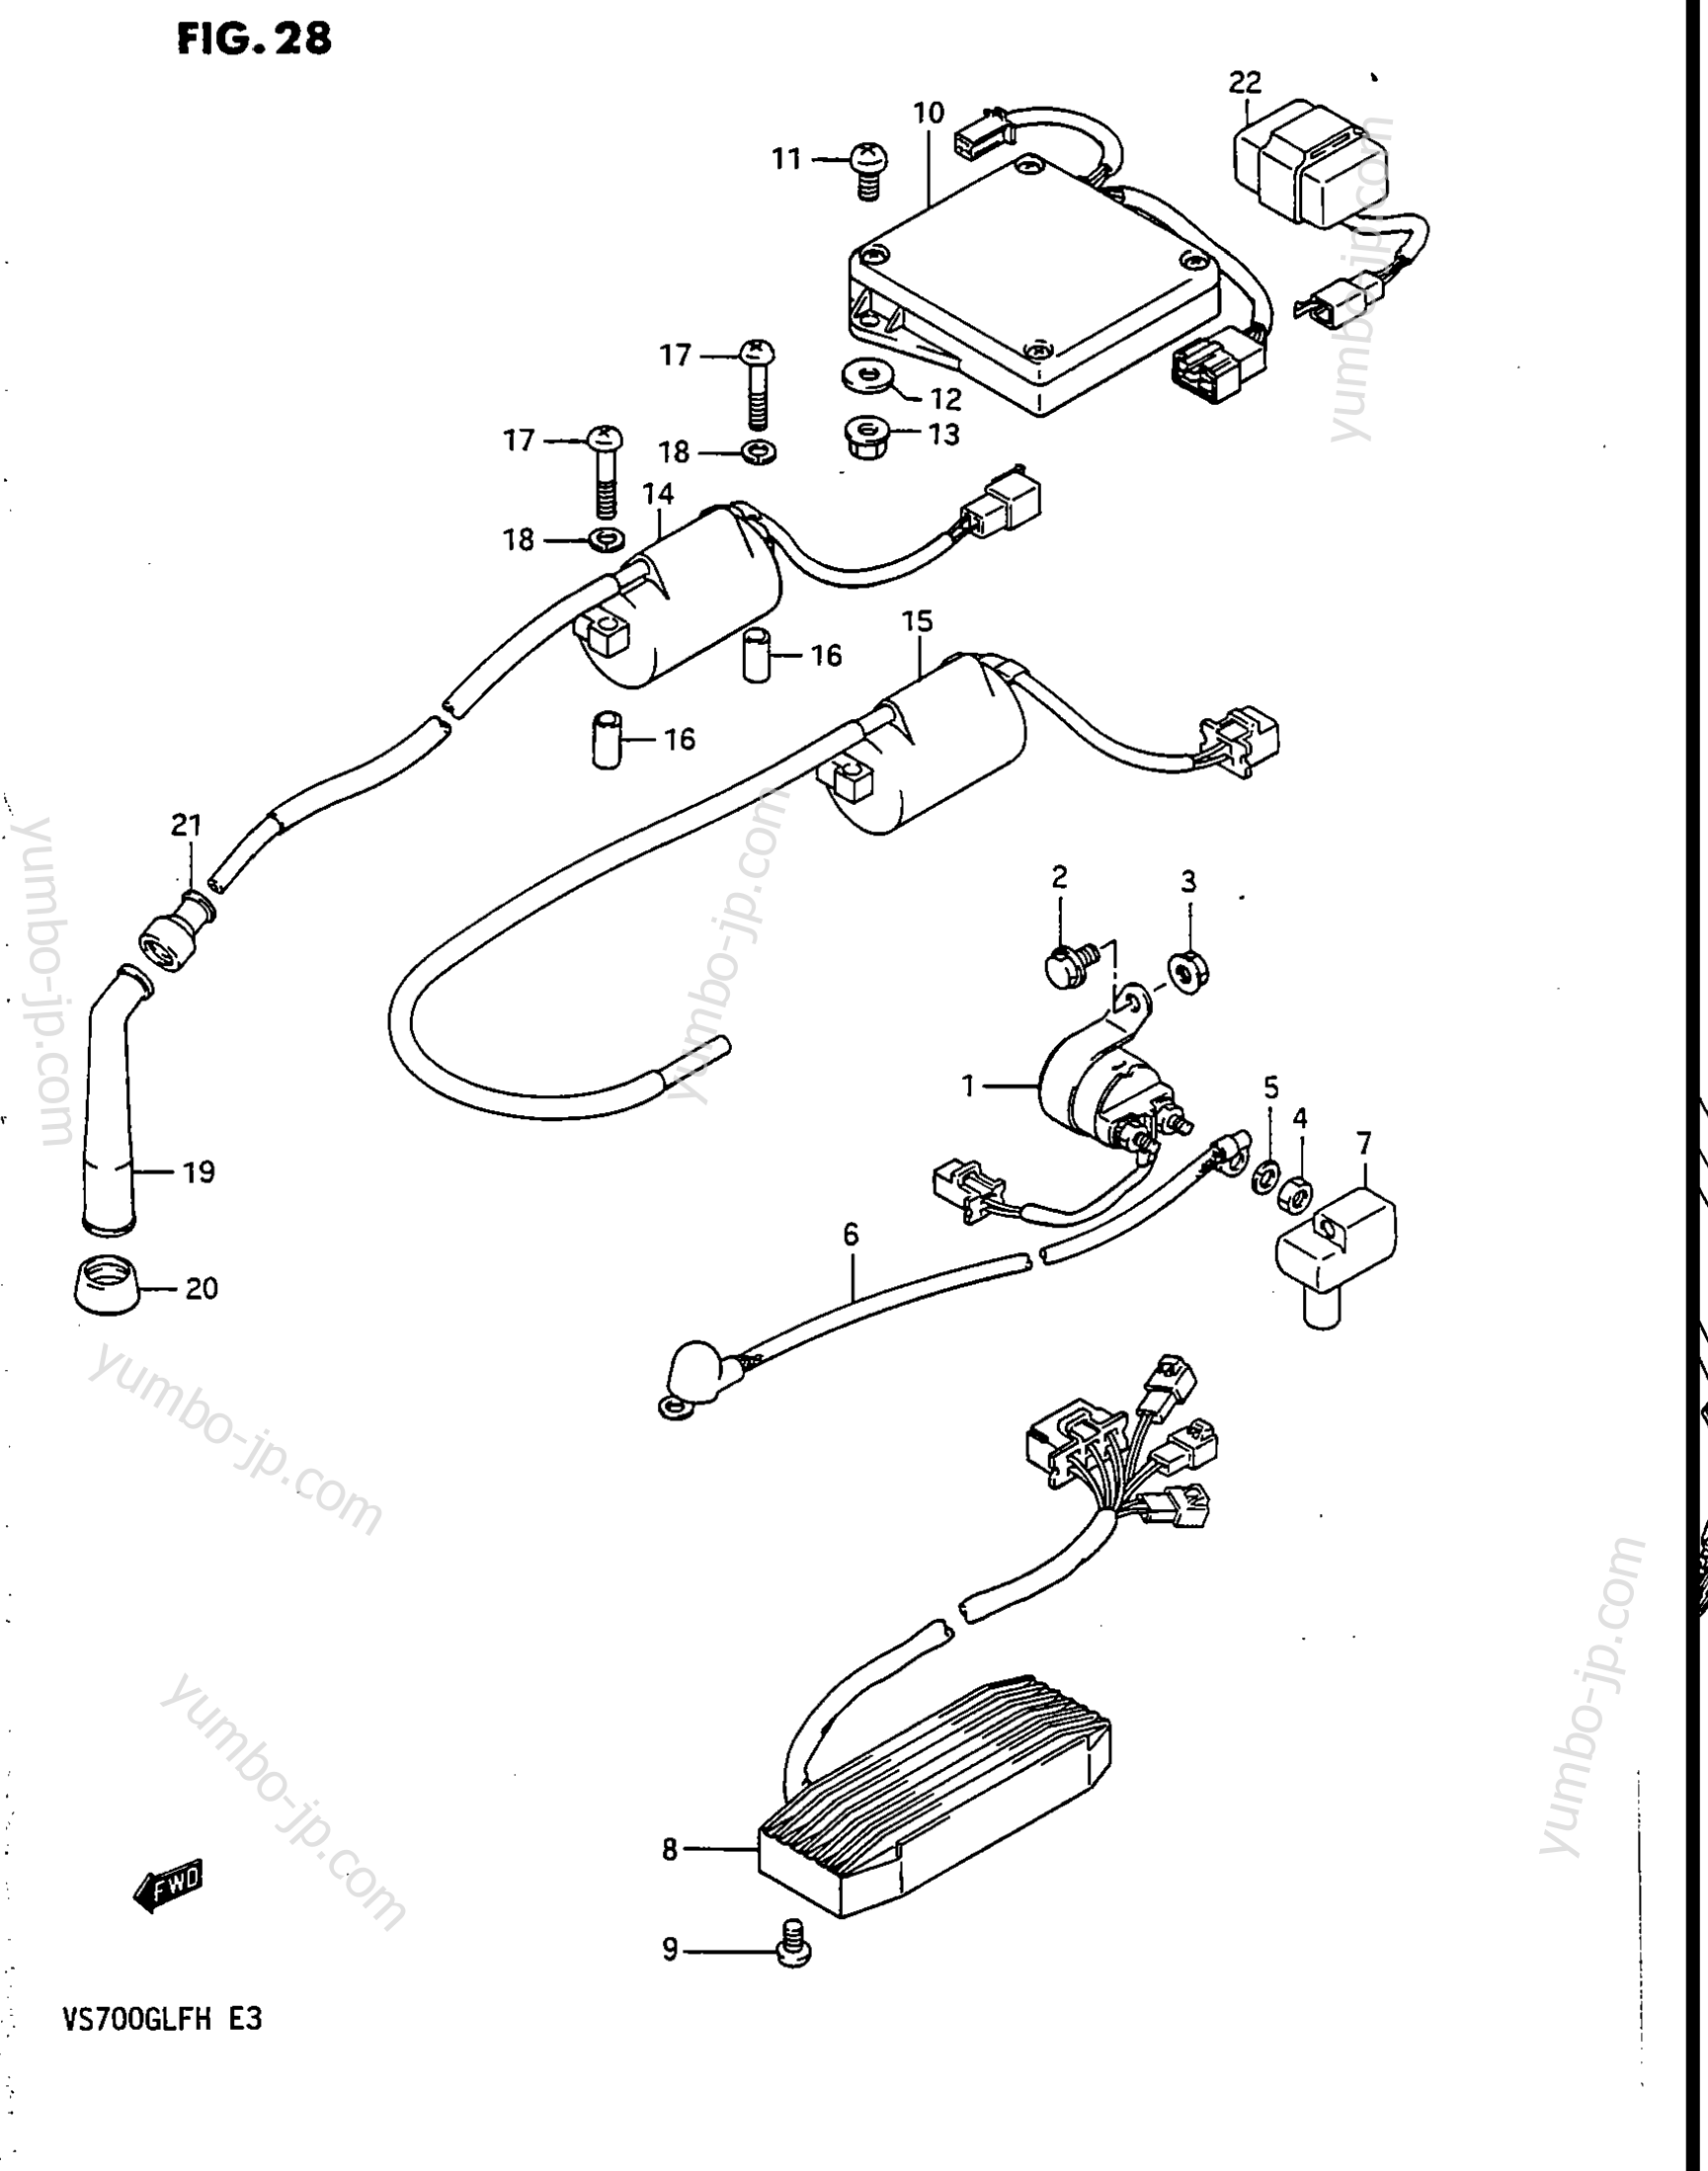 Electrical for motorcycles SUZUKI Intruder (VS700GLEF) 1987 year